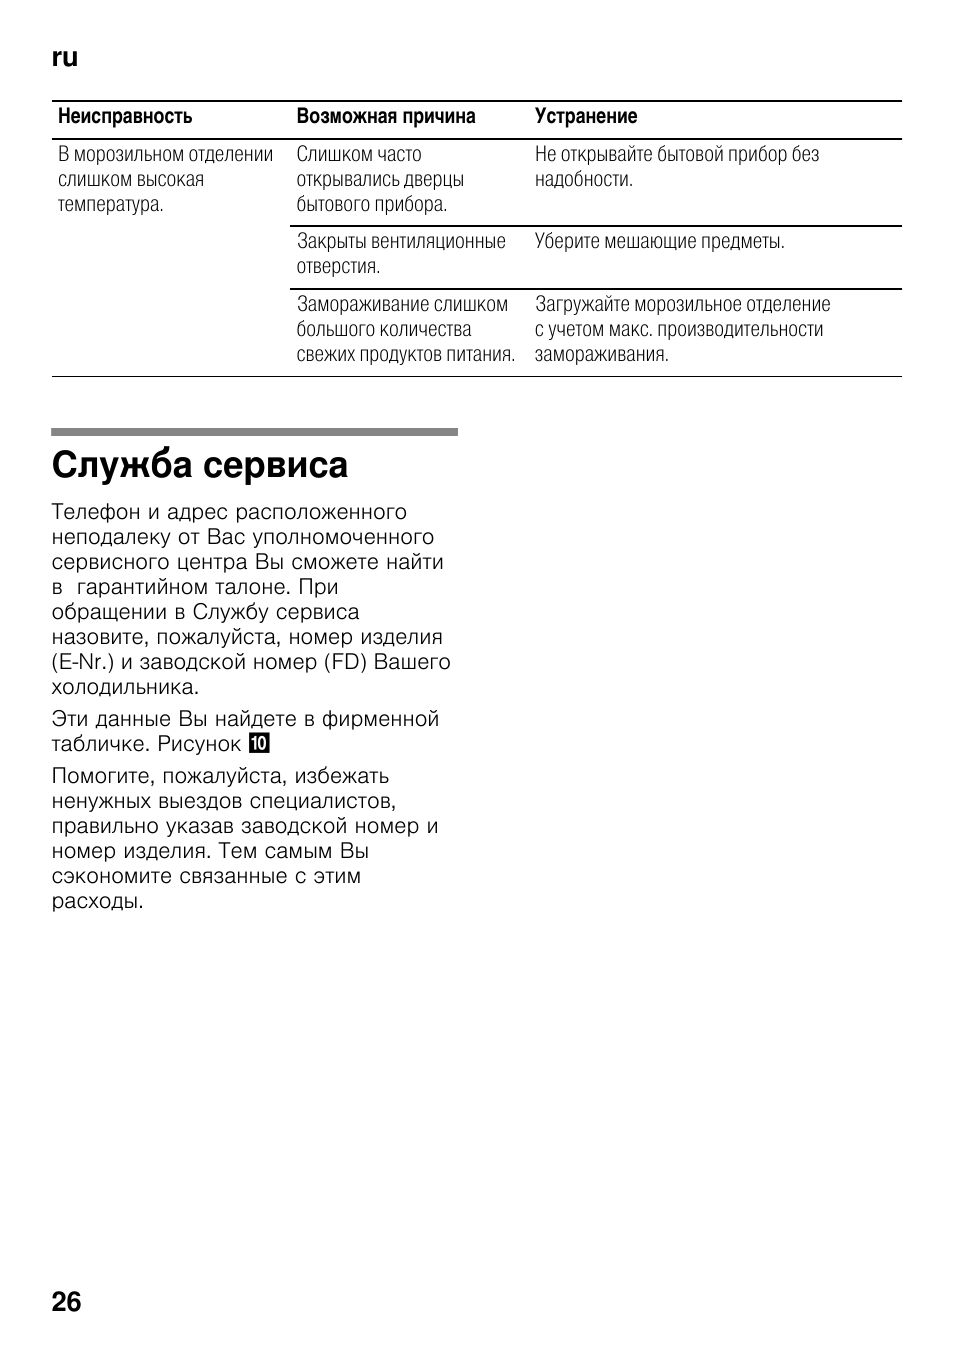 Cлyжбa cepвиca, Ru 26 | Инструкция по эксплуатации Sharp SJB236ZRSL | Страница 26 / 30